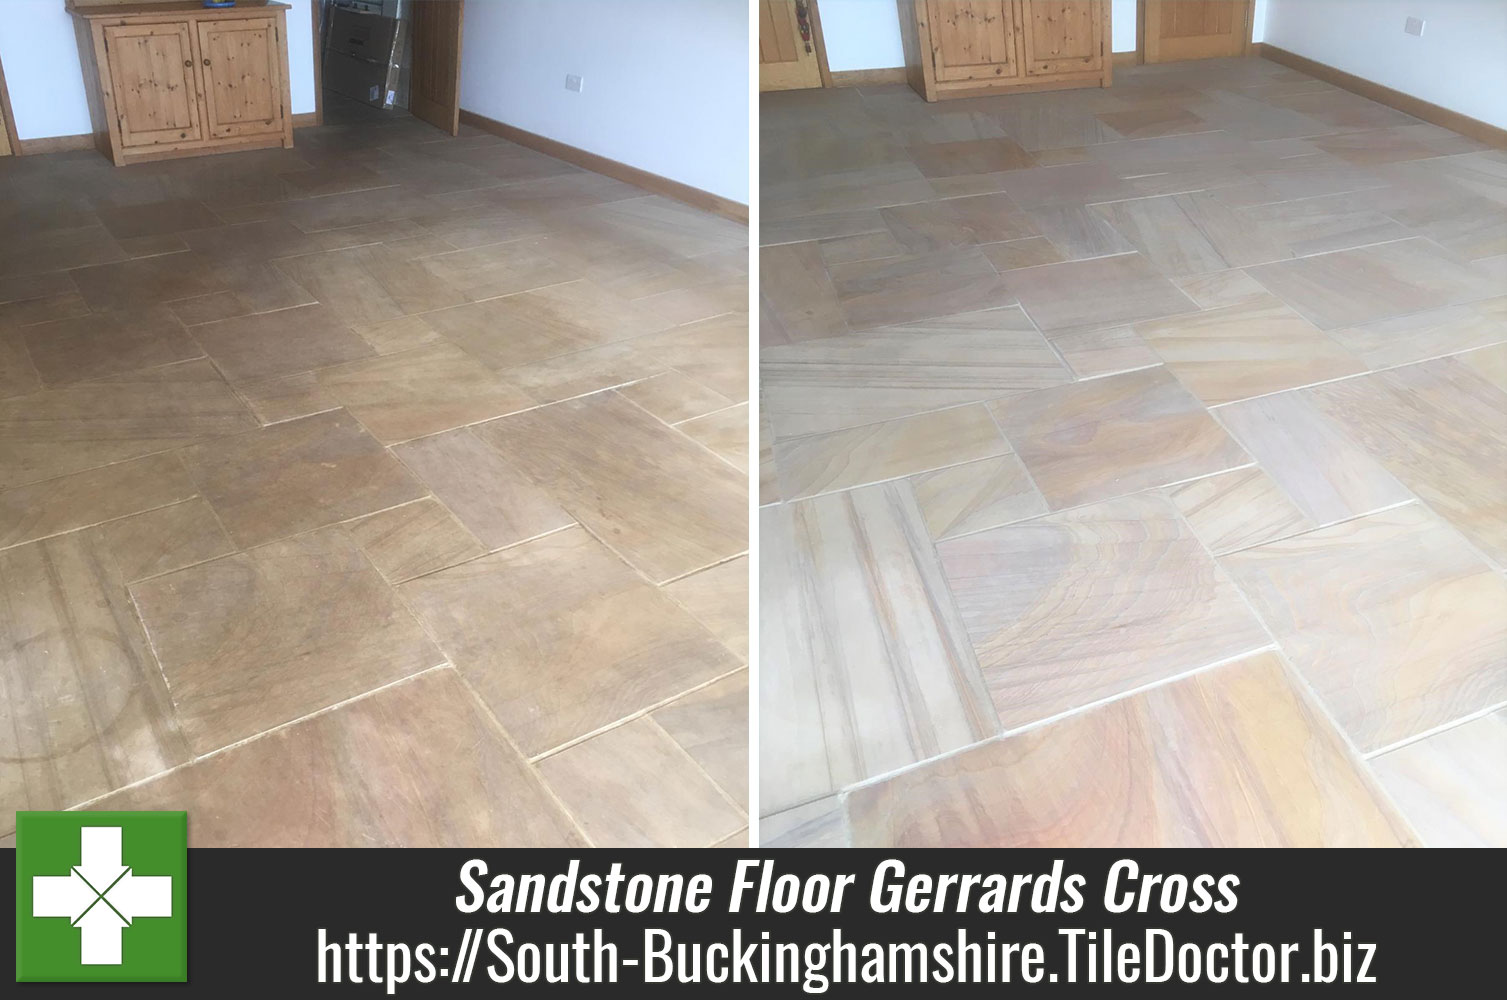 Smooth-Indian-Sandstone-Kitchen-Floor-Renovation-Gerard's-Cross